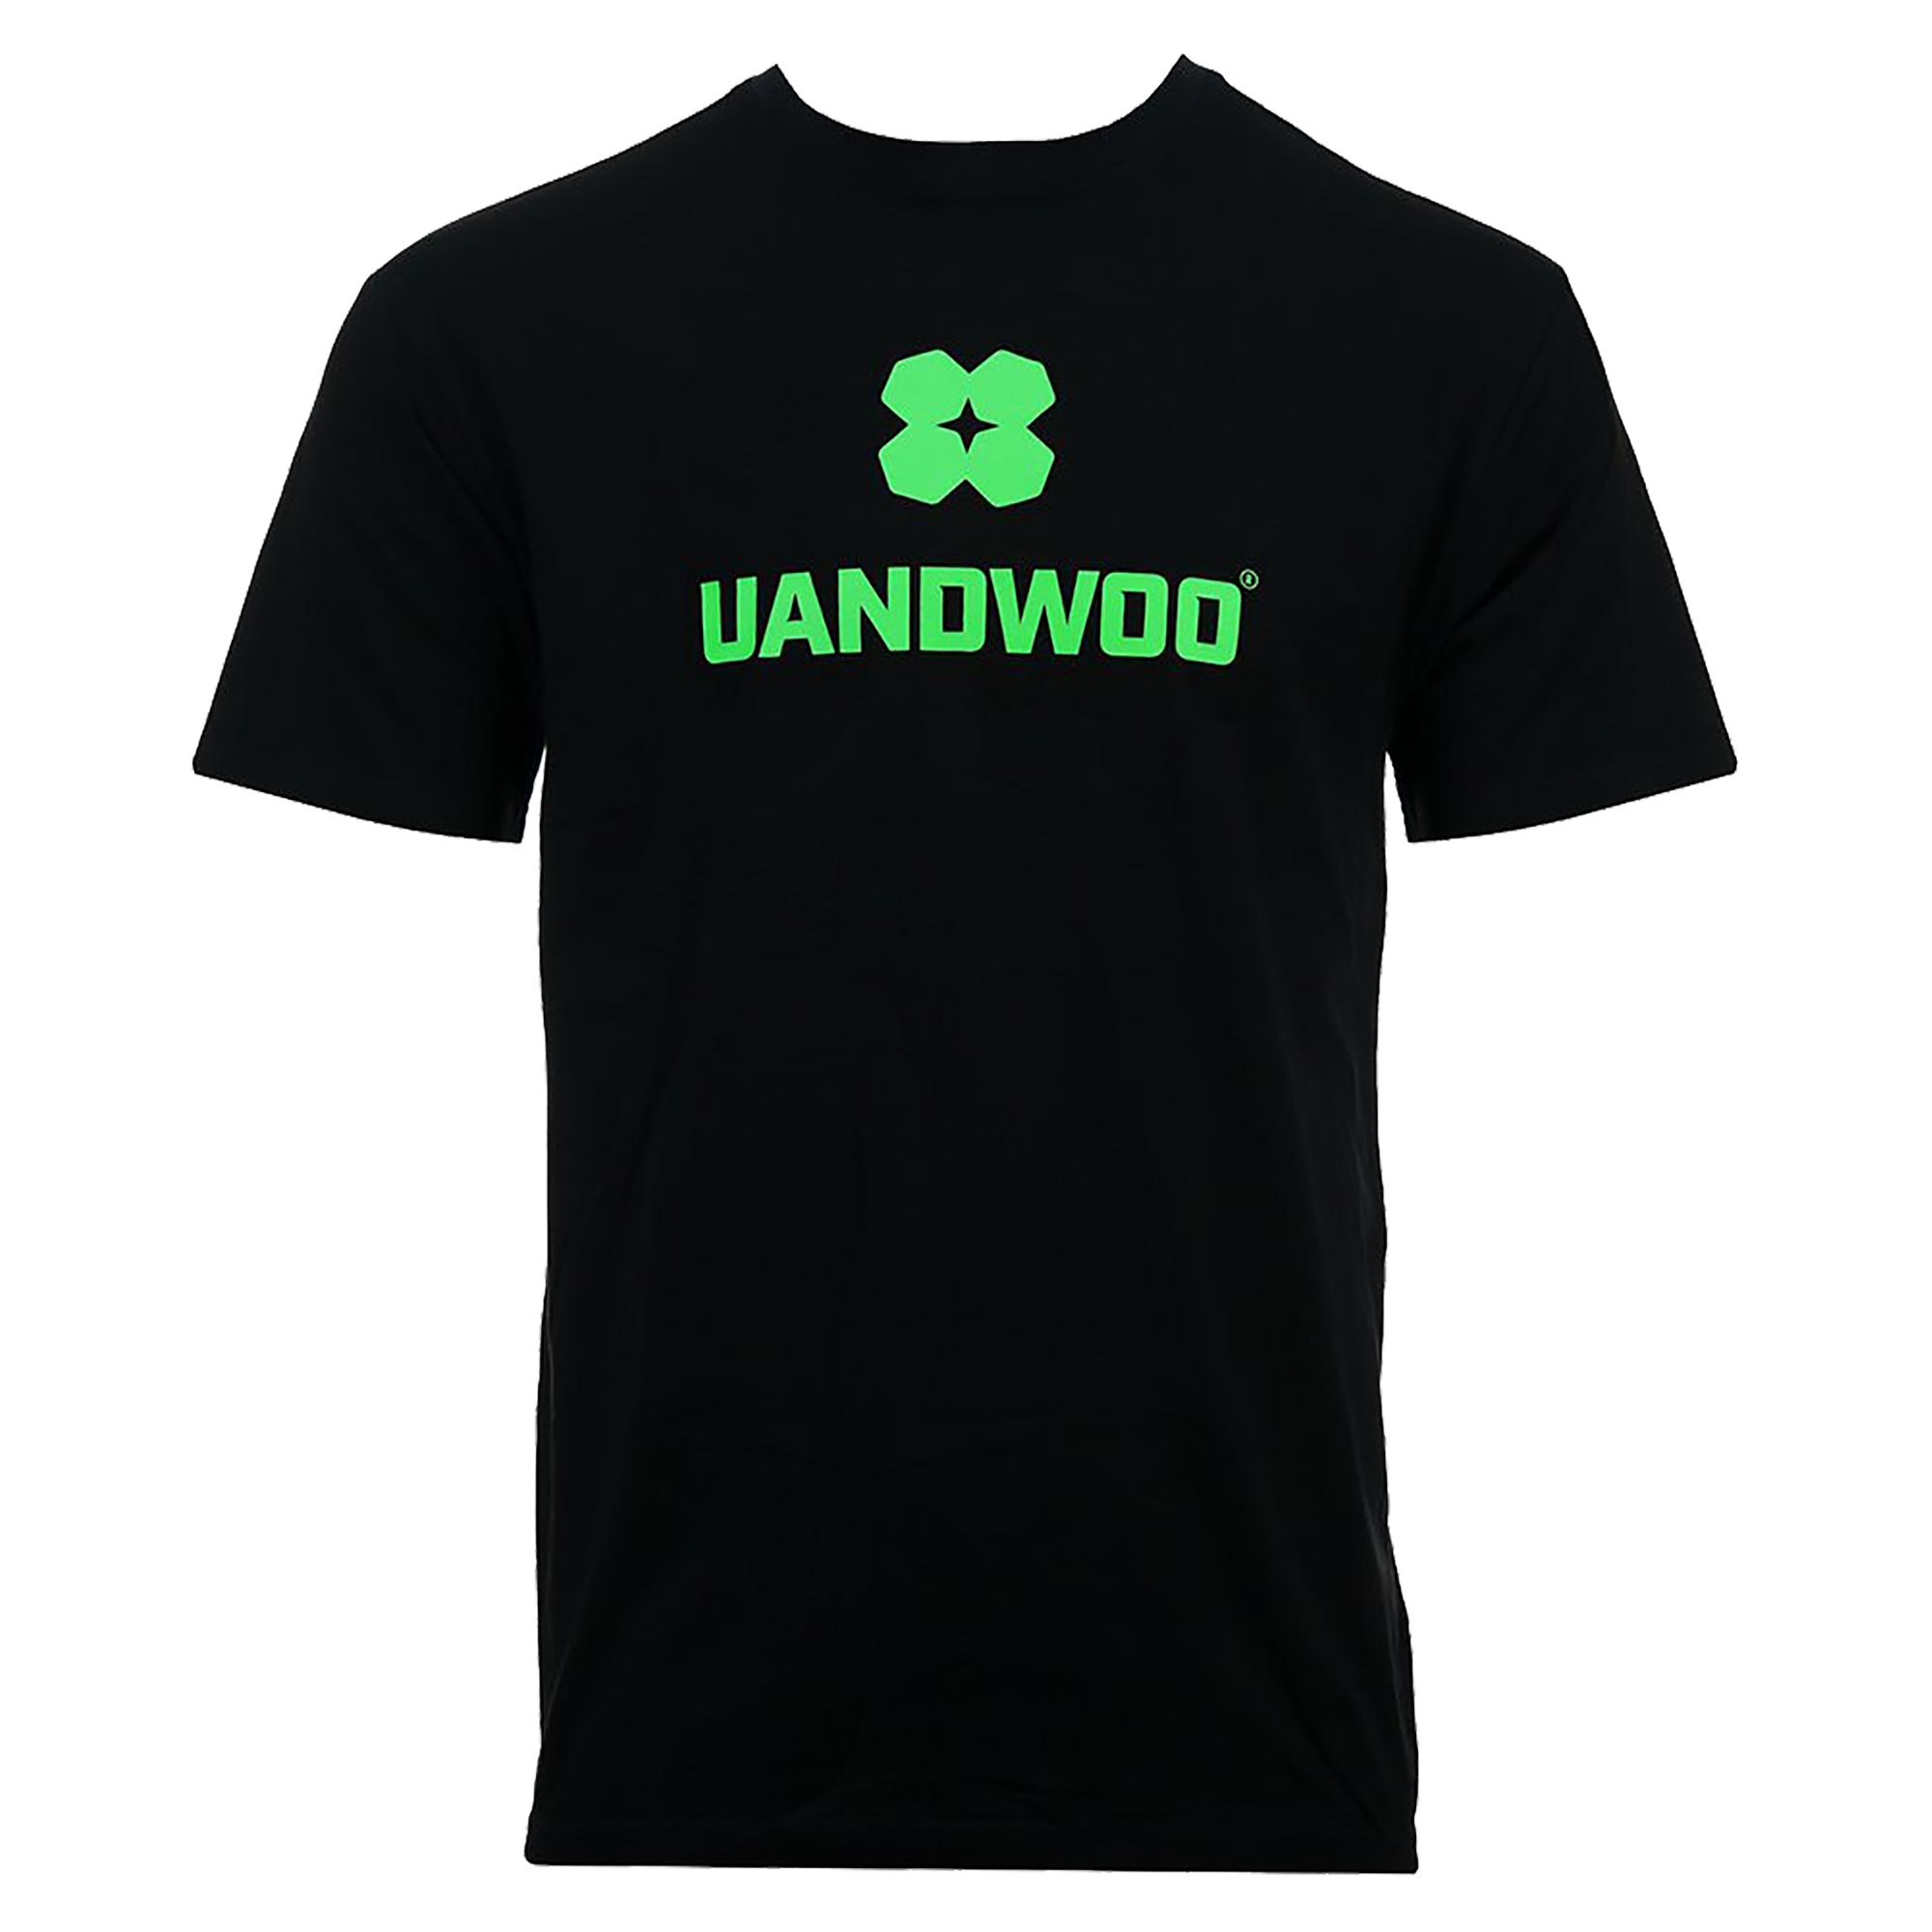 Uandwoo Lifestyle T-Shirt